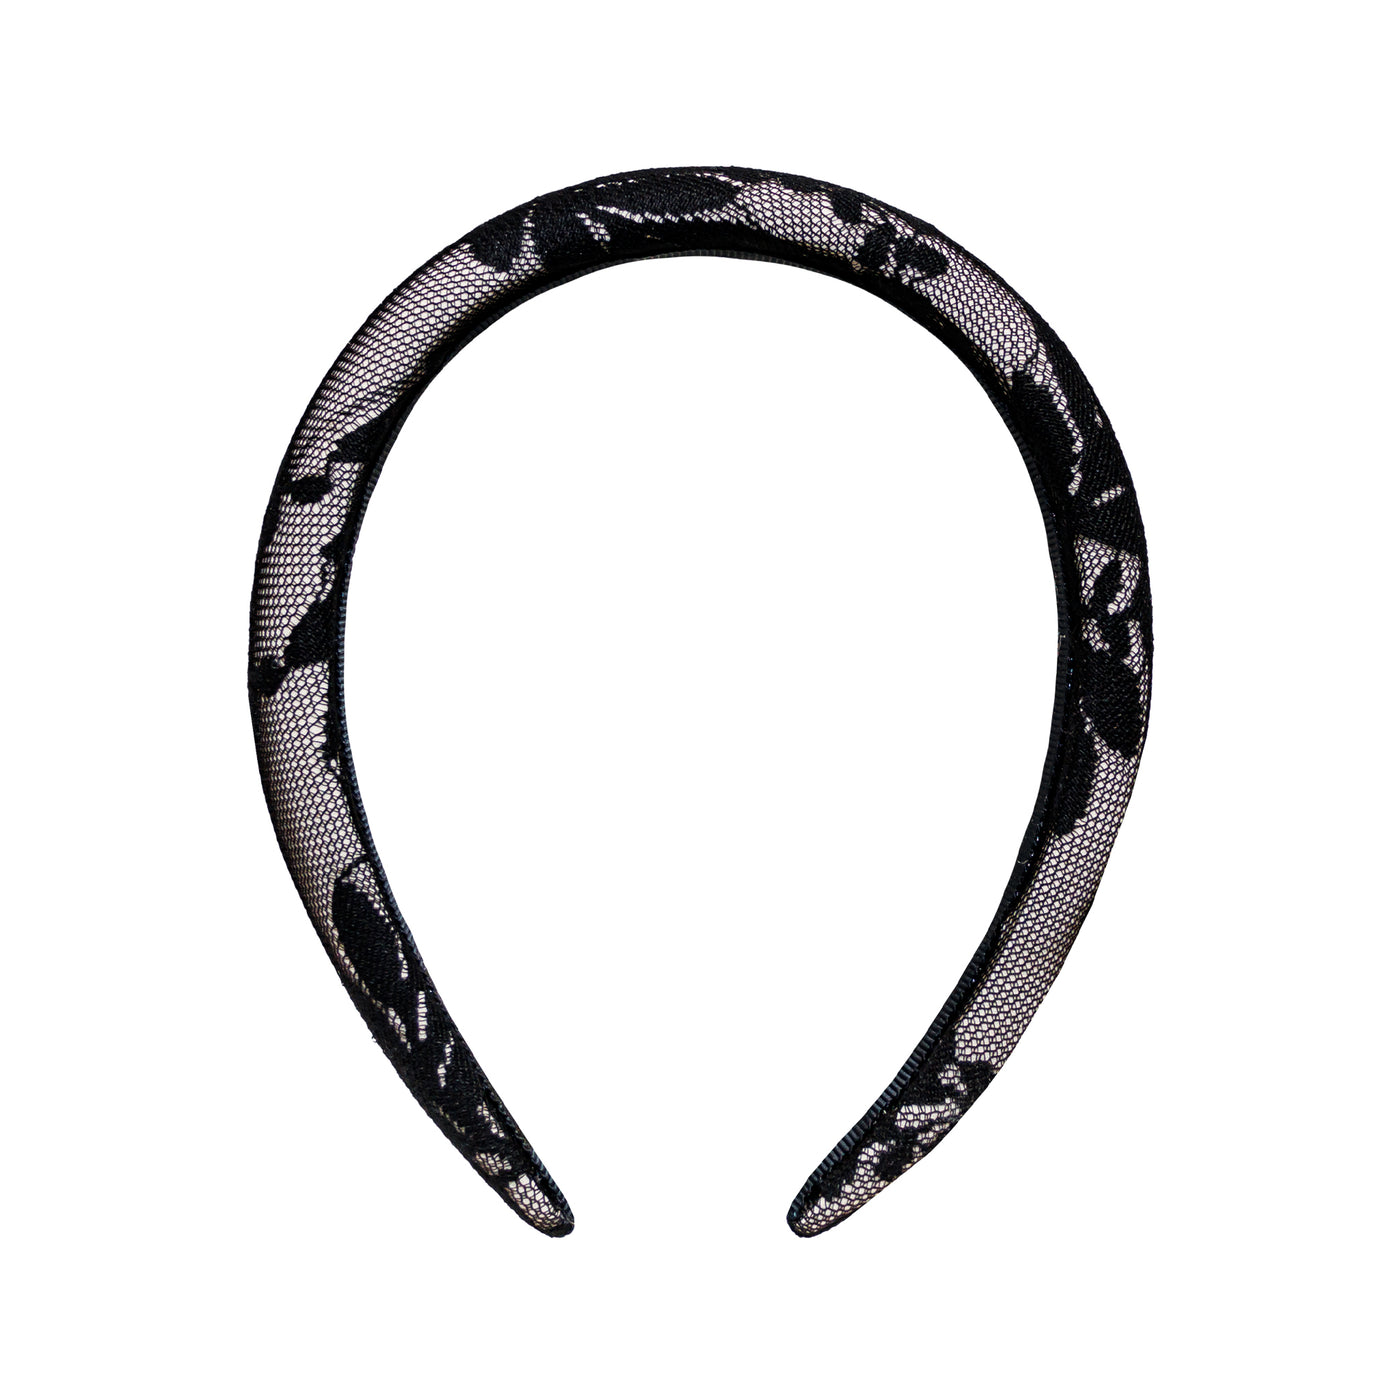 Halo Headband in Black Lace